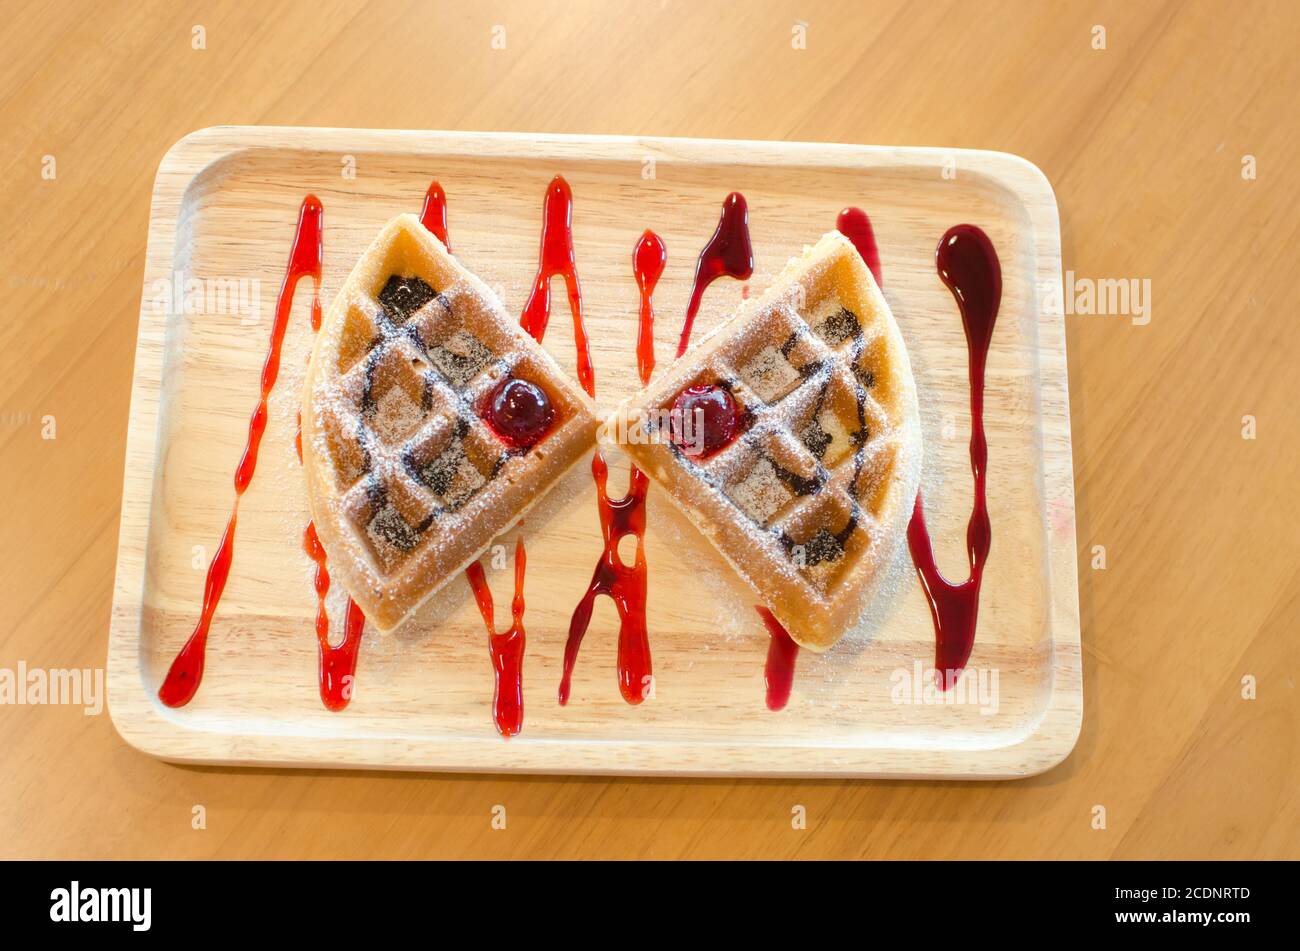 Waffles chocolate and strawberry Stock Photo